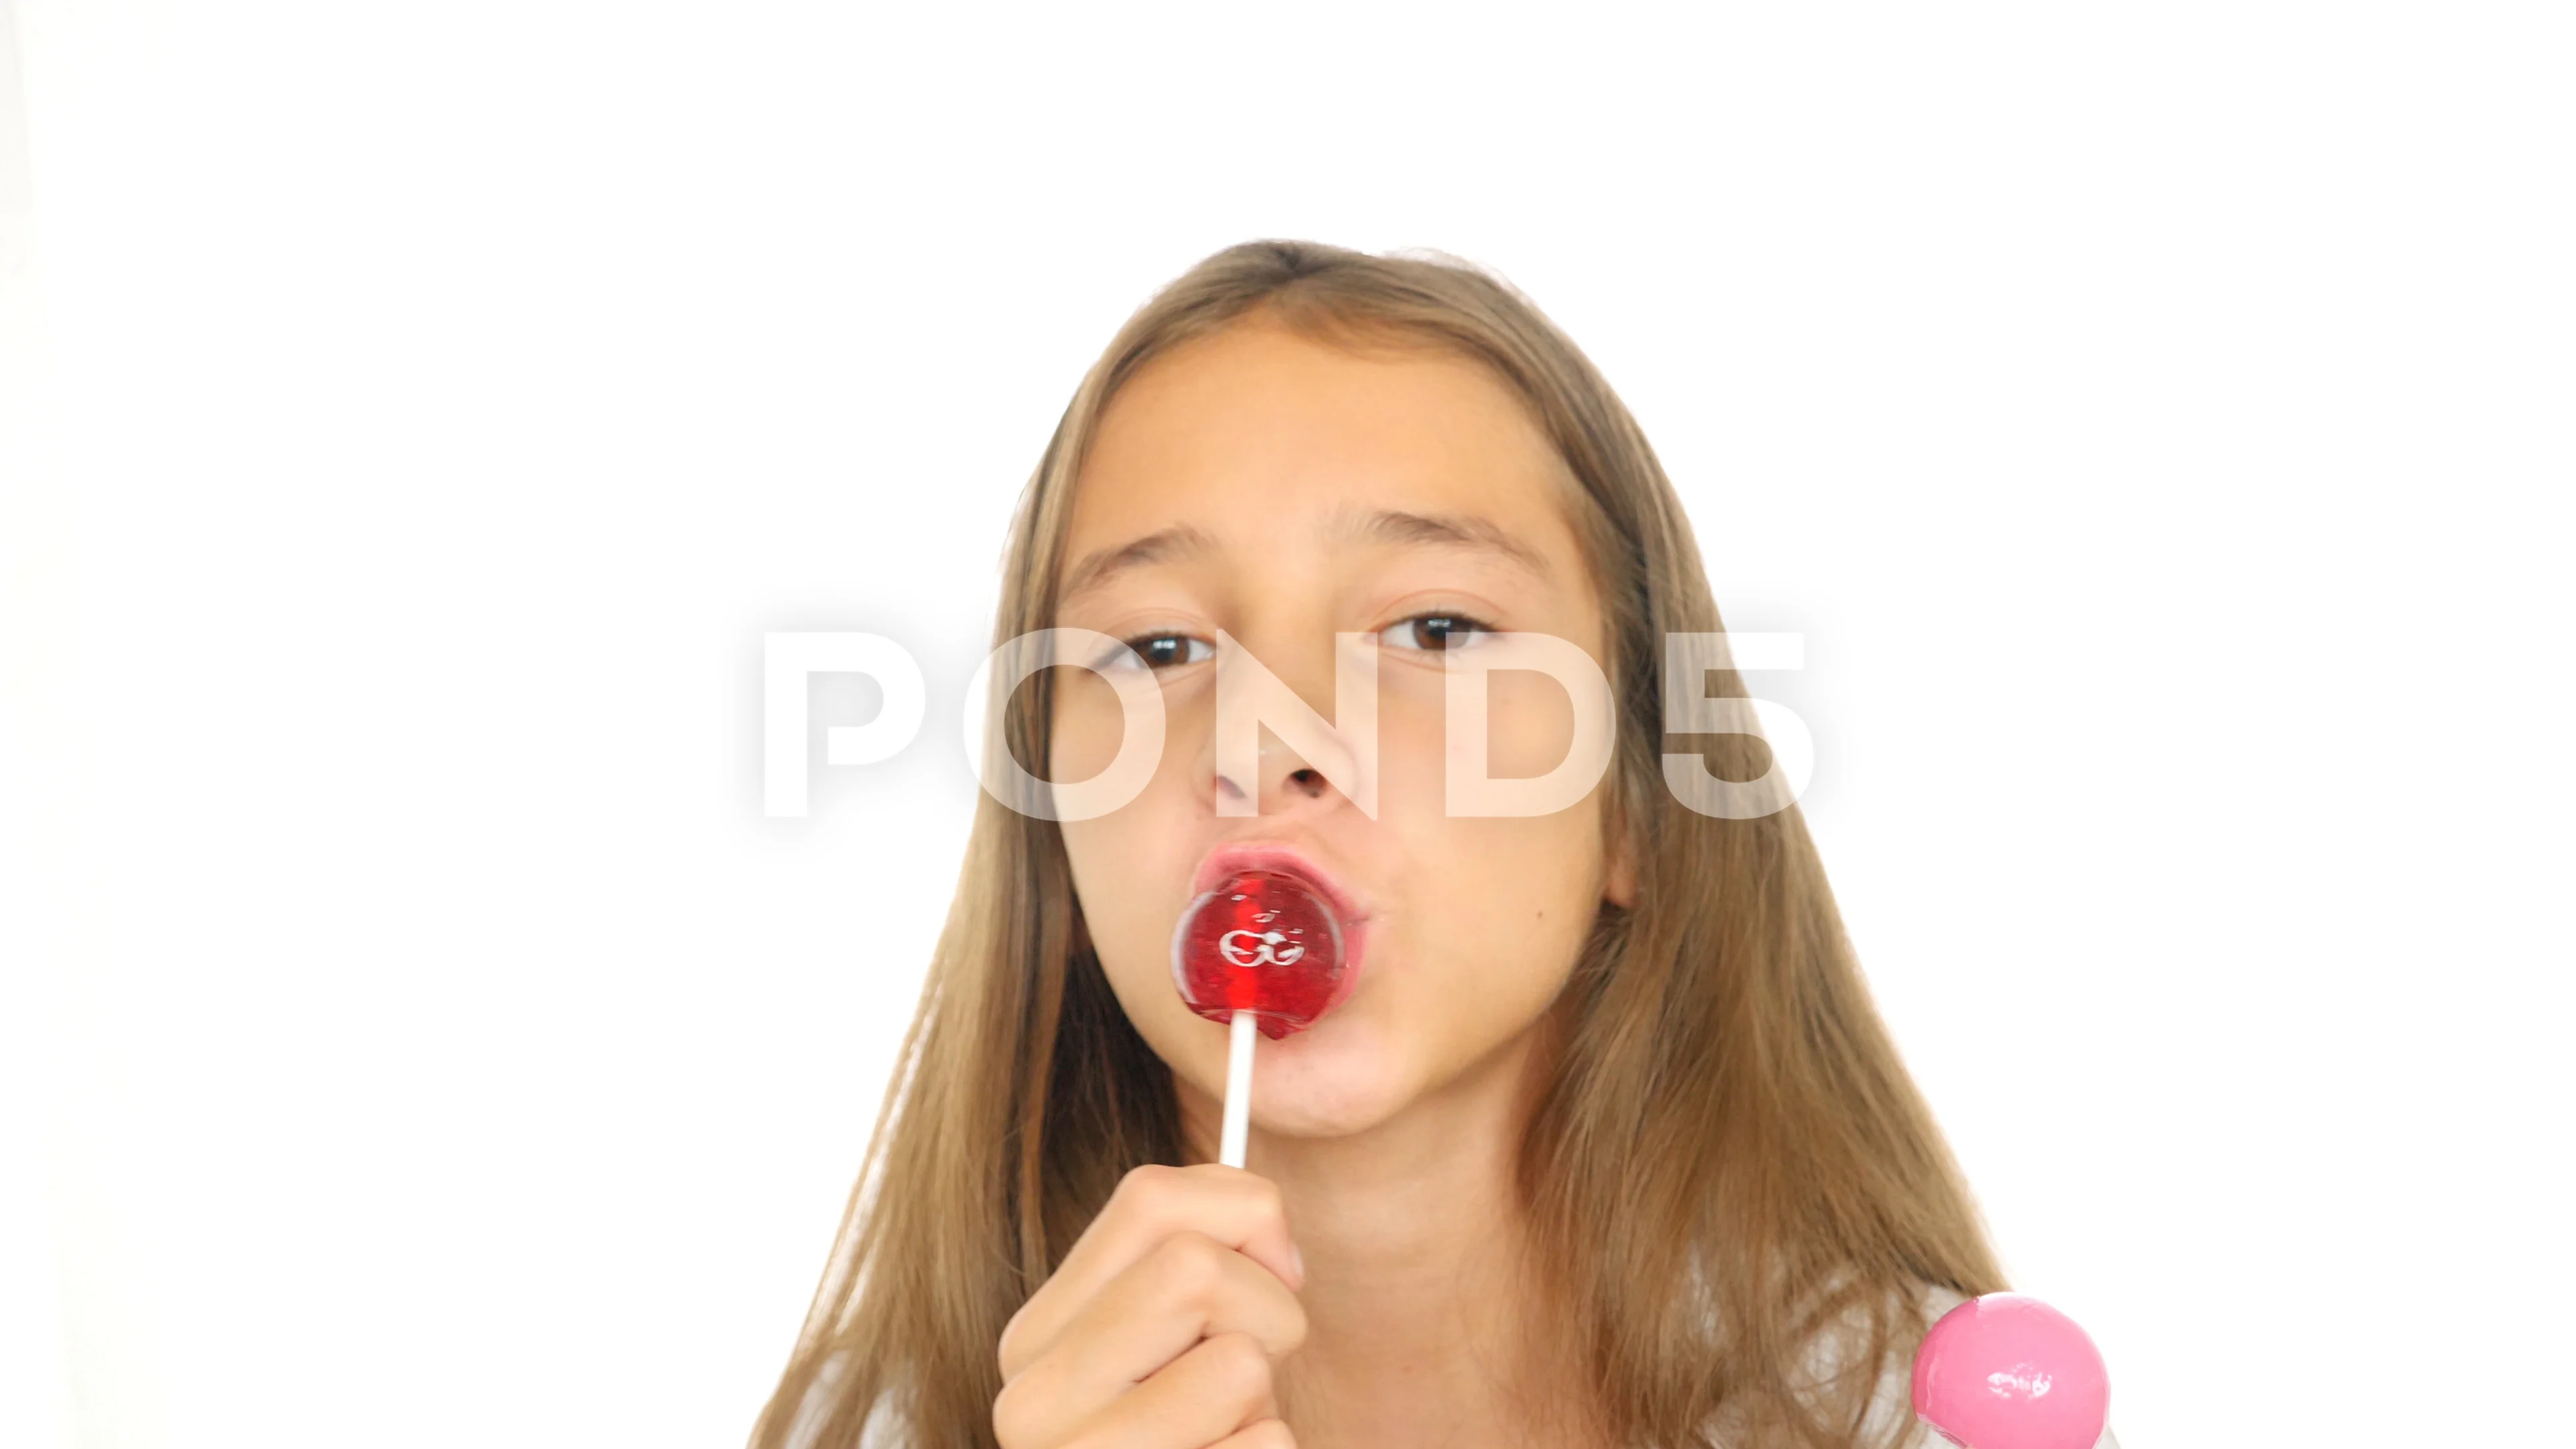 adil jehangir add photo licking a lollipop